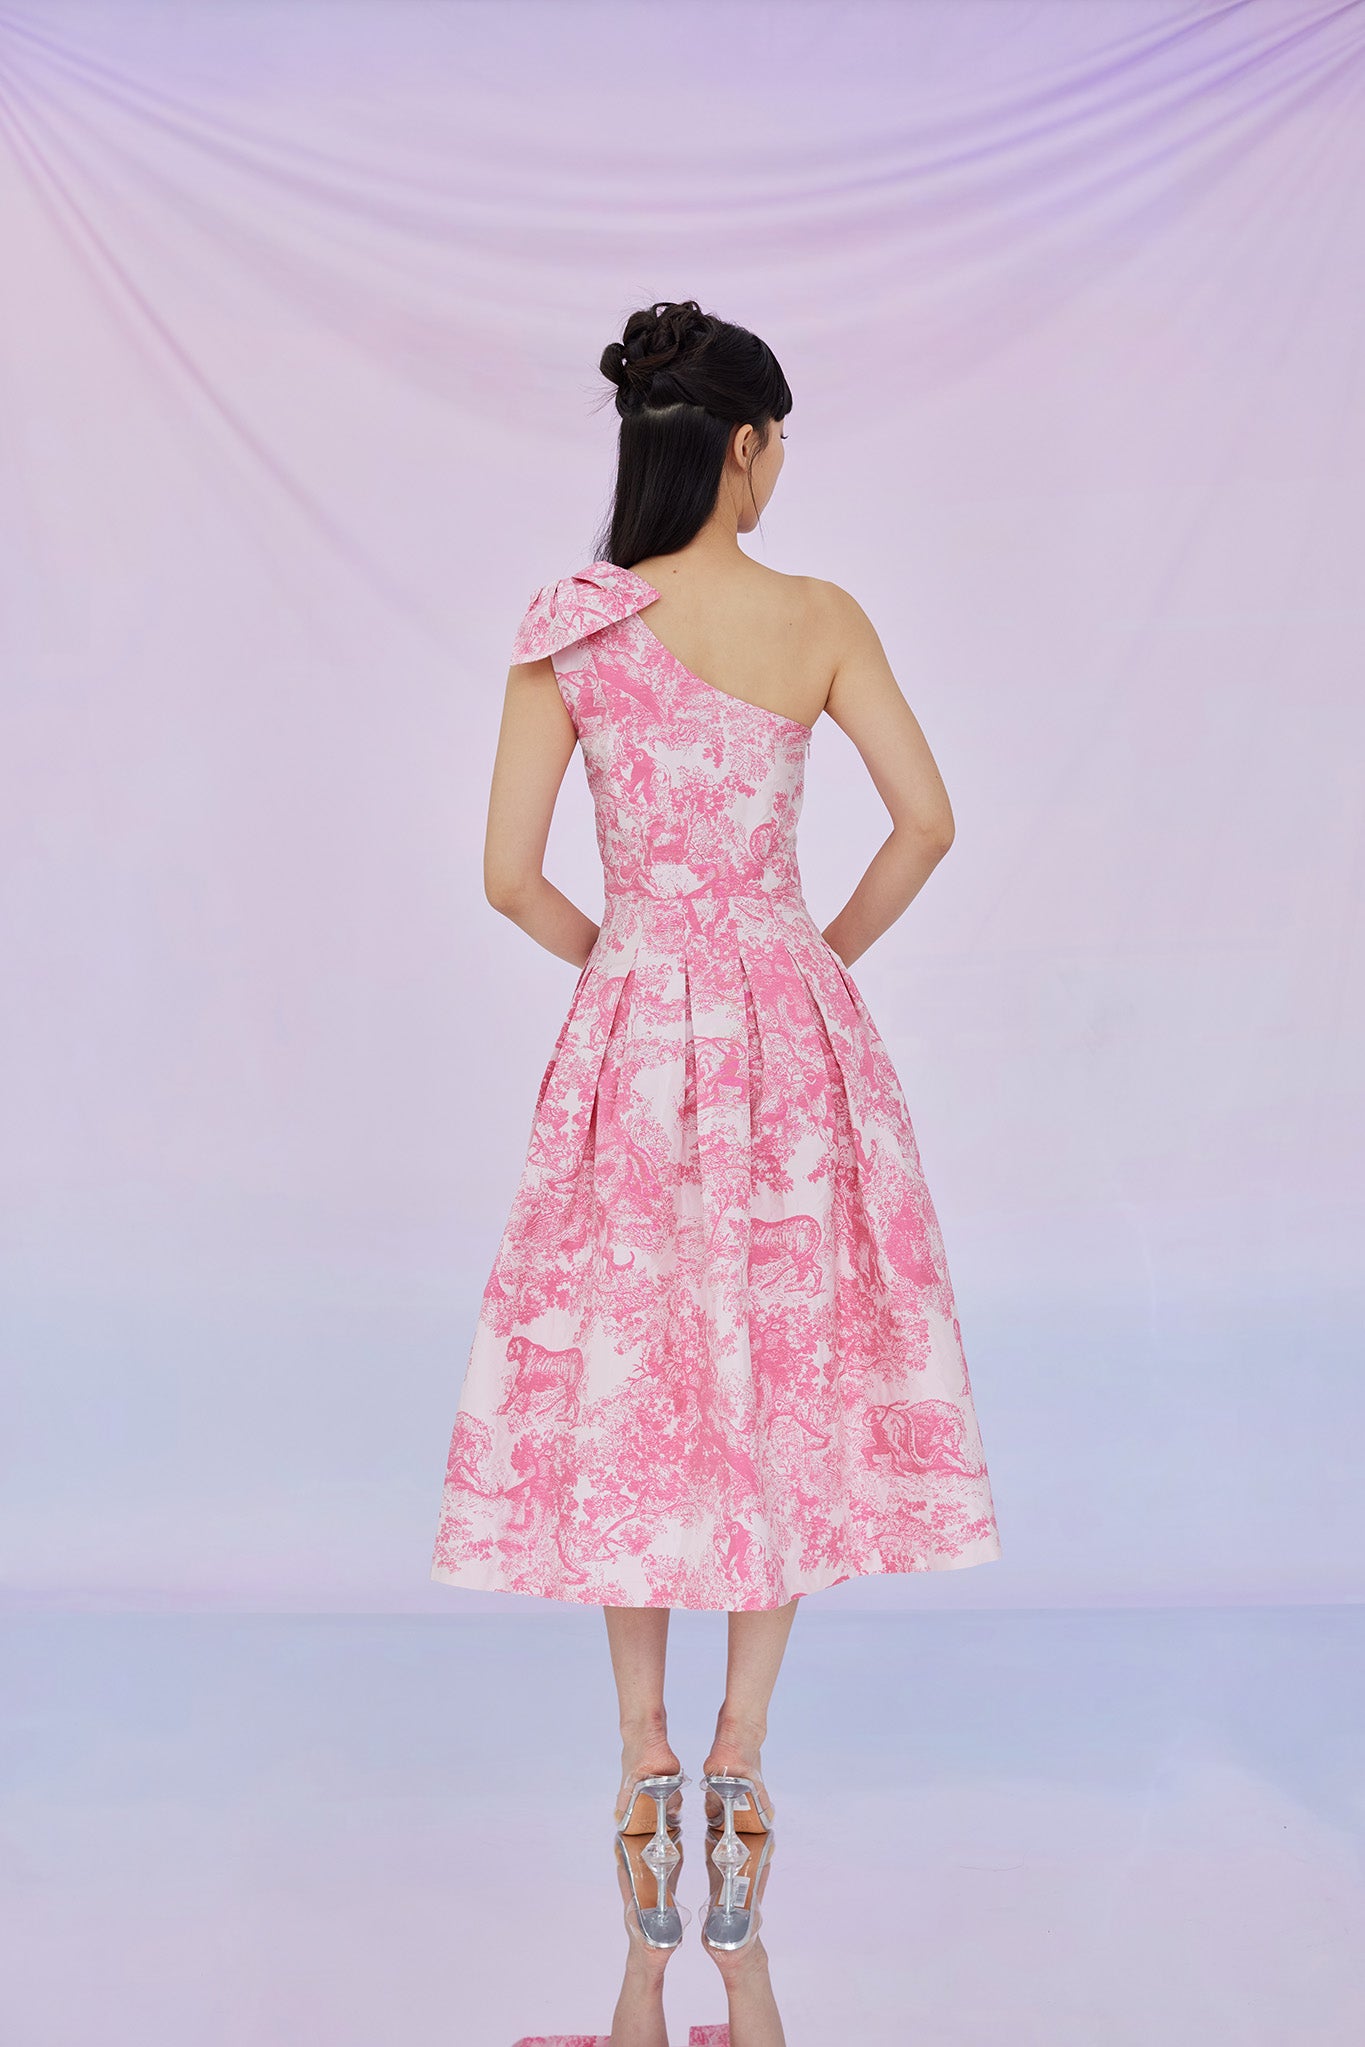 Gwenette Animal Print Pink Dress